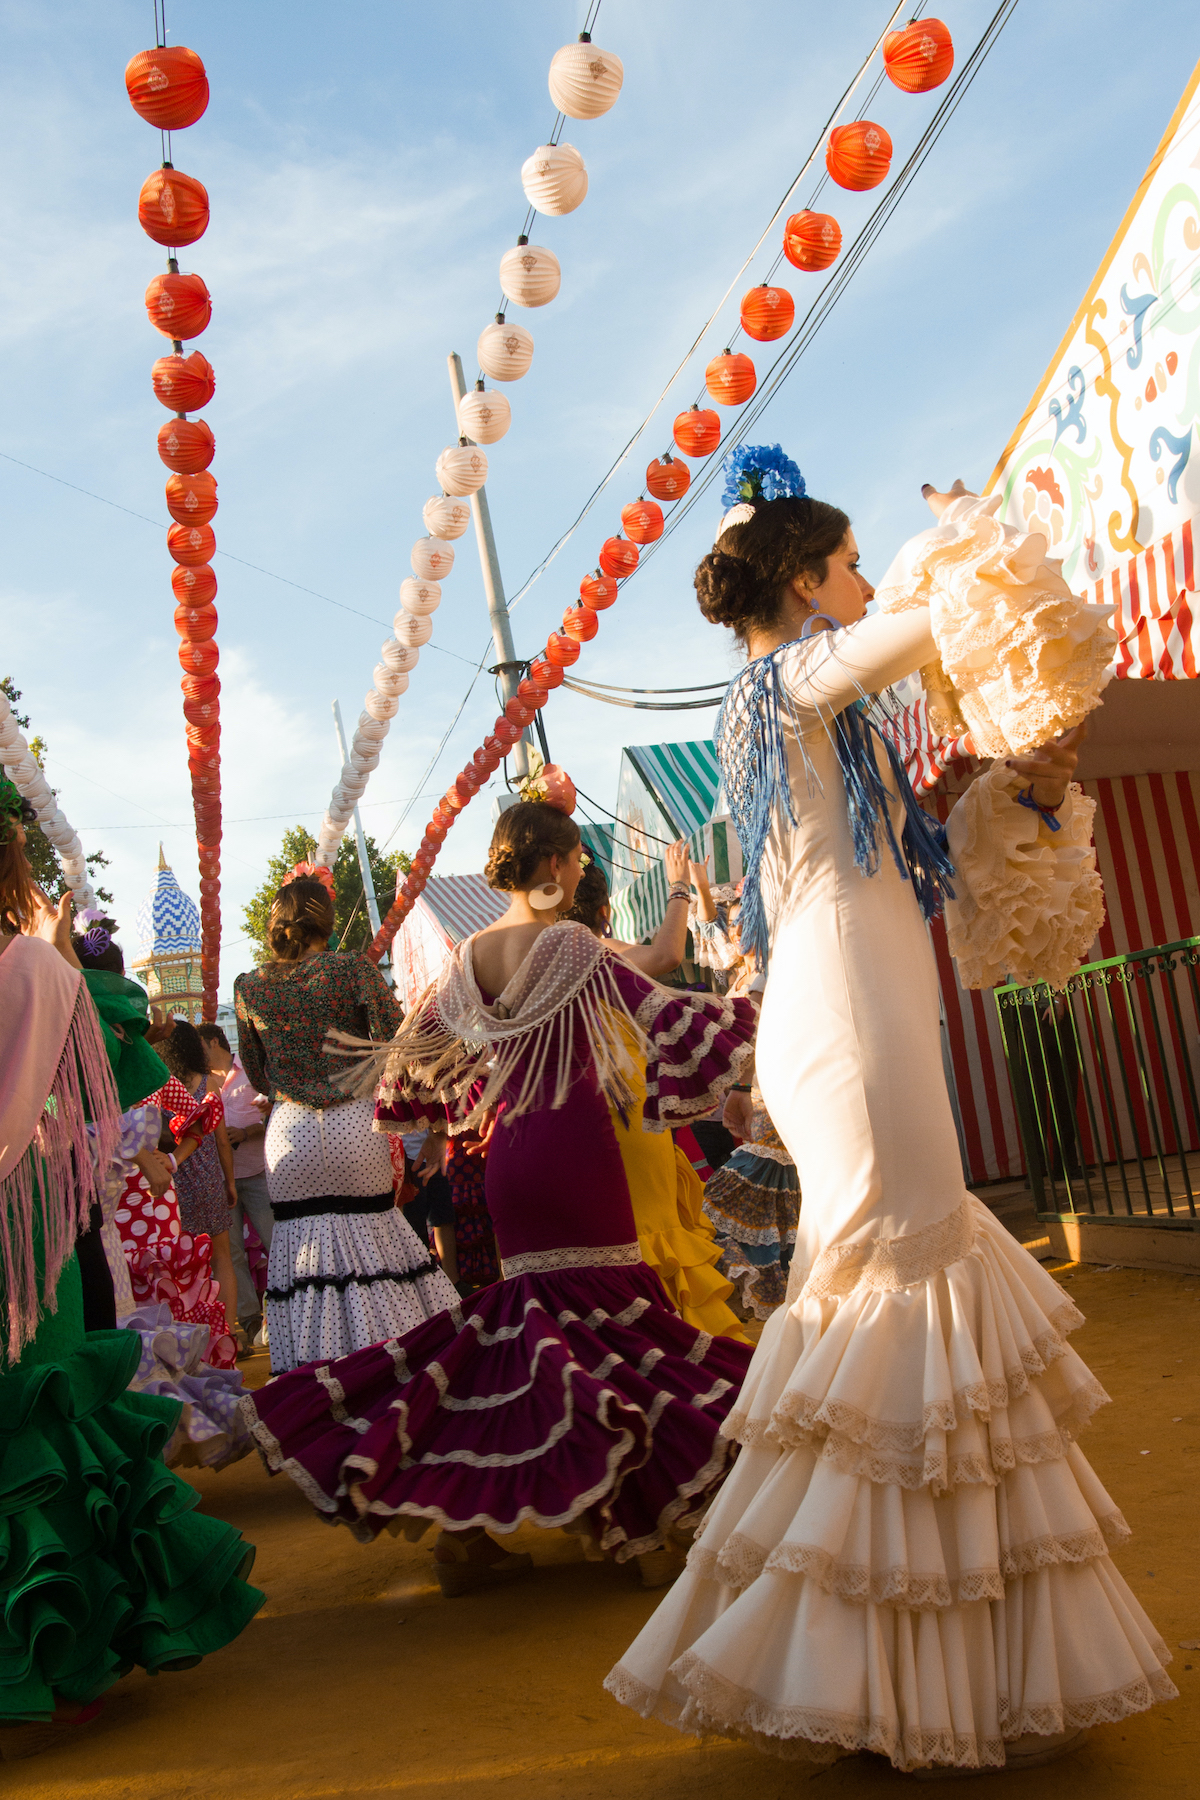 Group of women in flamenco dresses beneath three strings of paper lanterns.